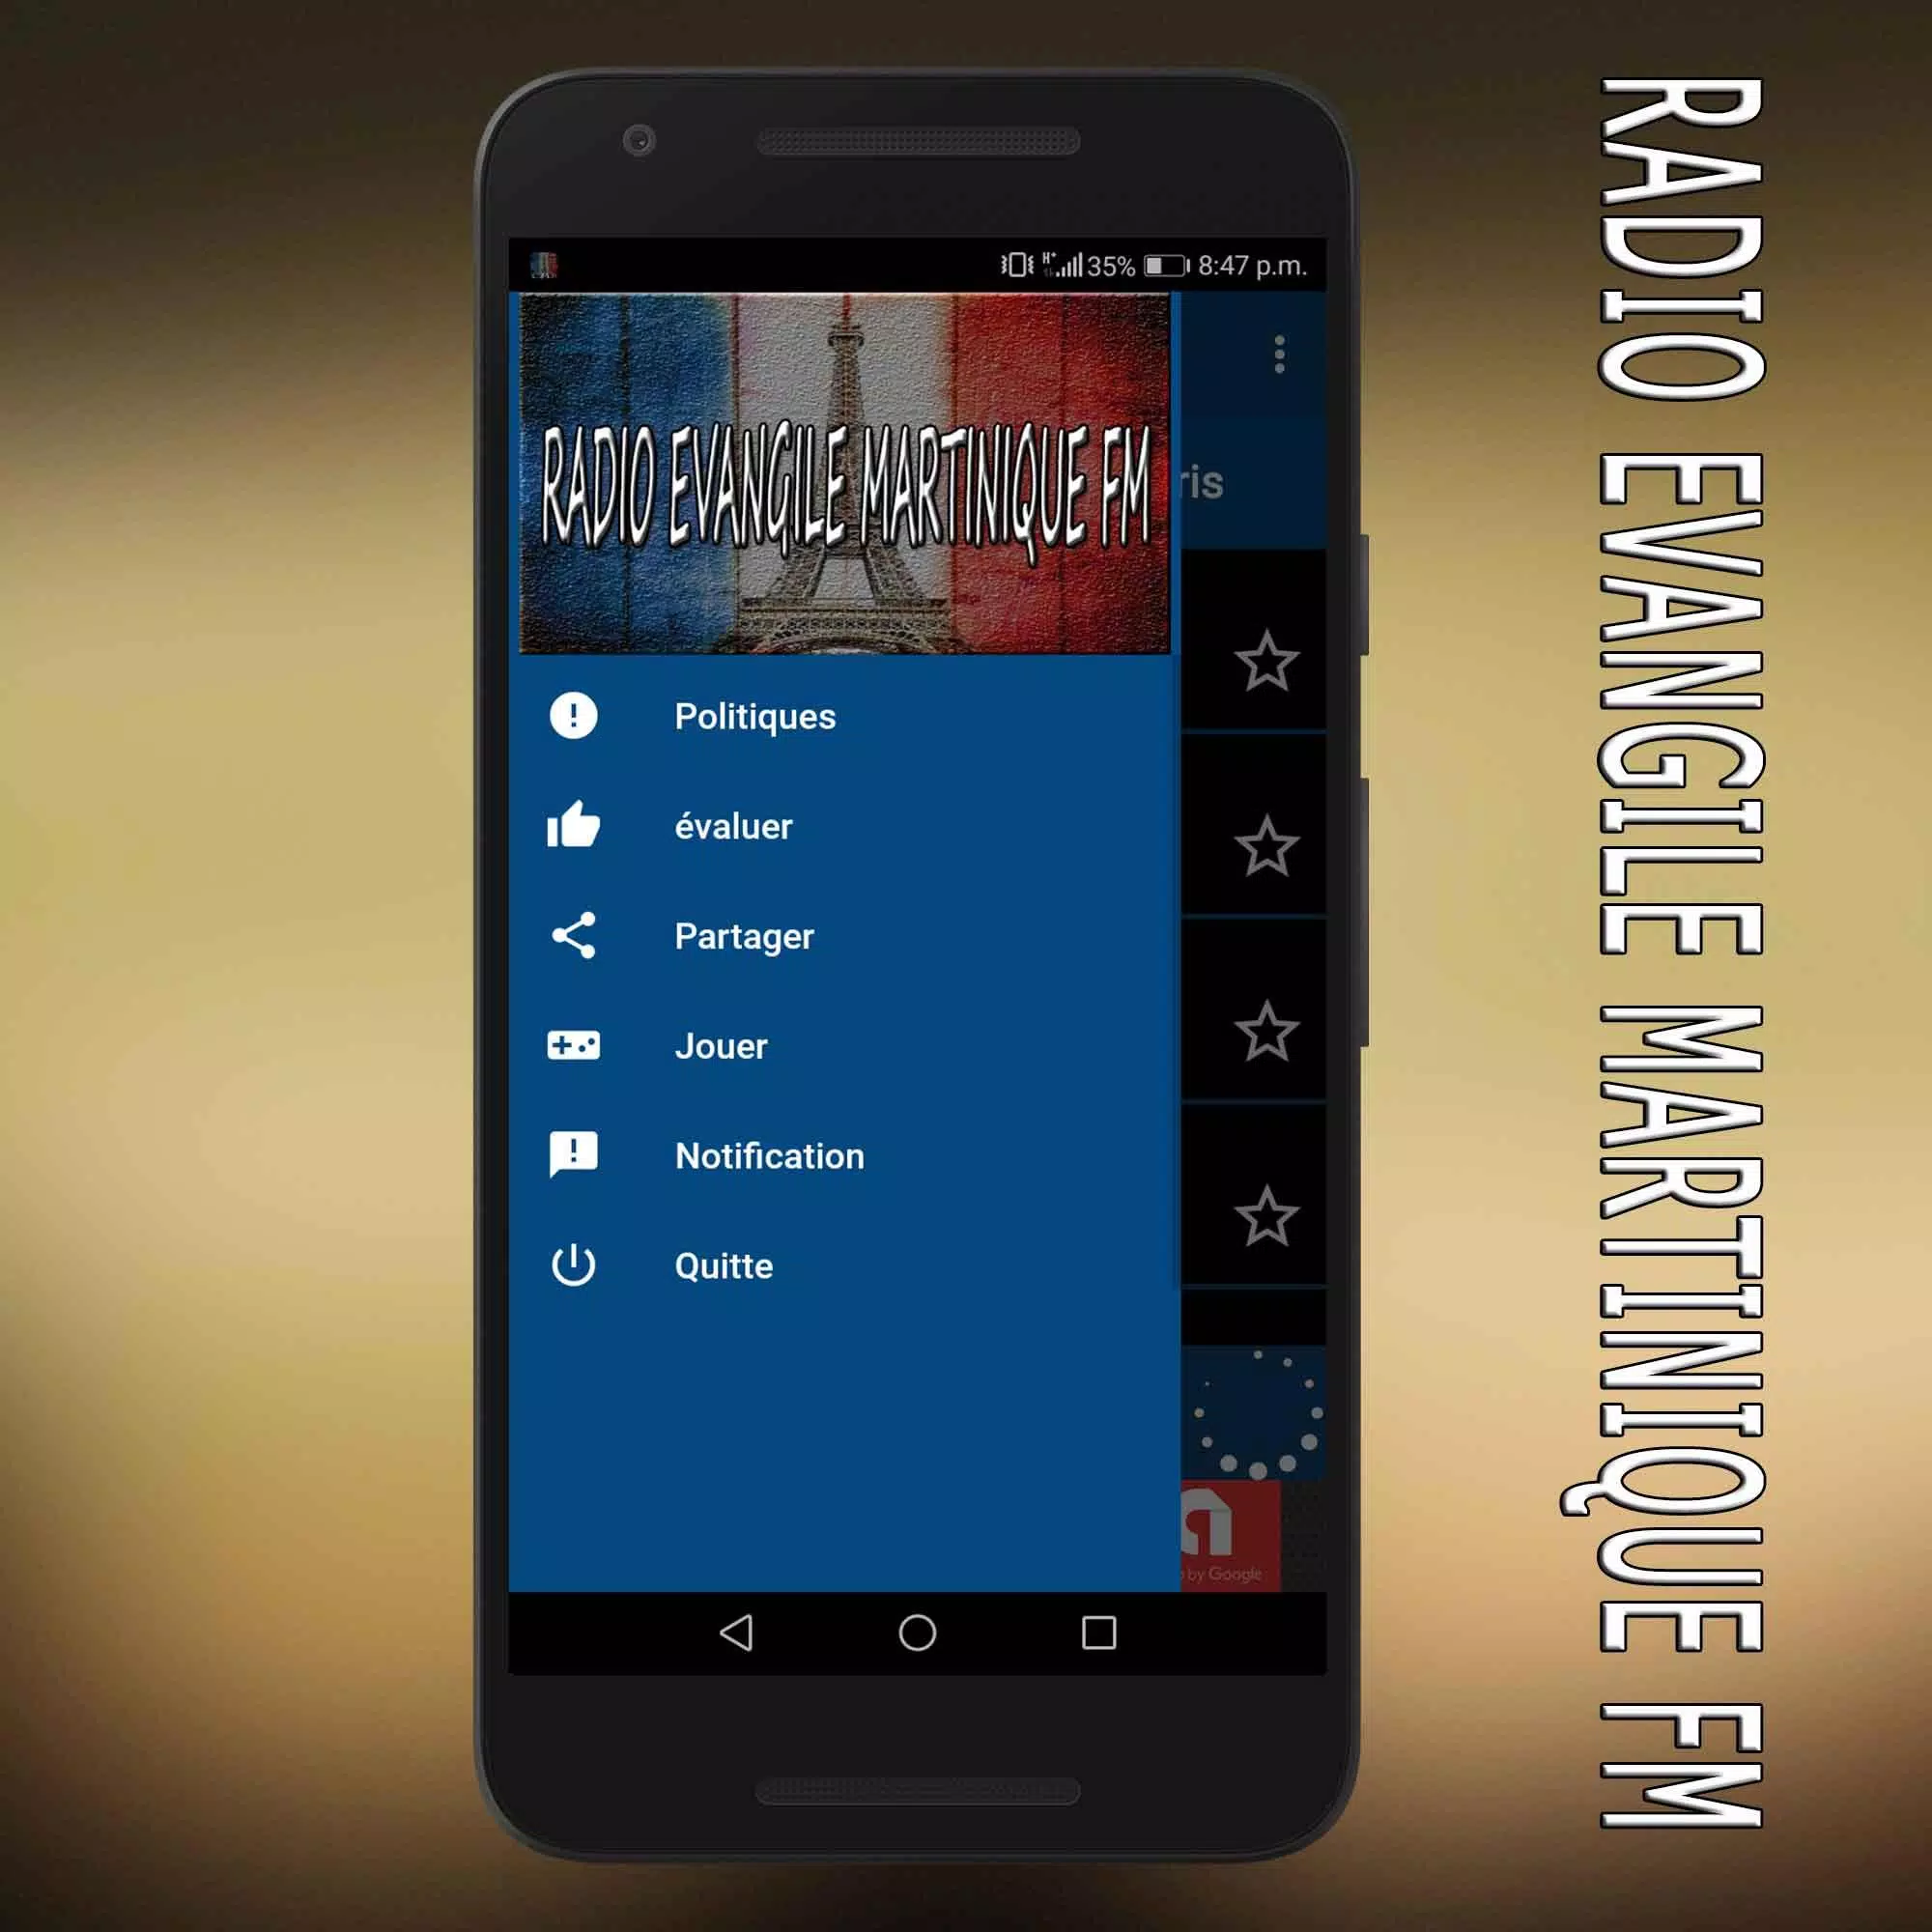 radio evangile martinique fm en ligne gratuit app APK for Android Download